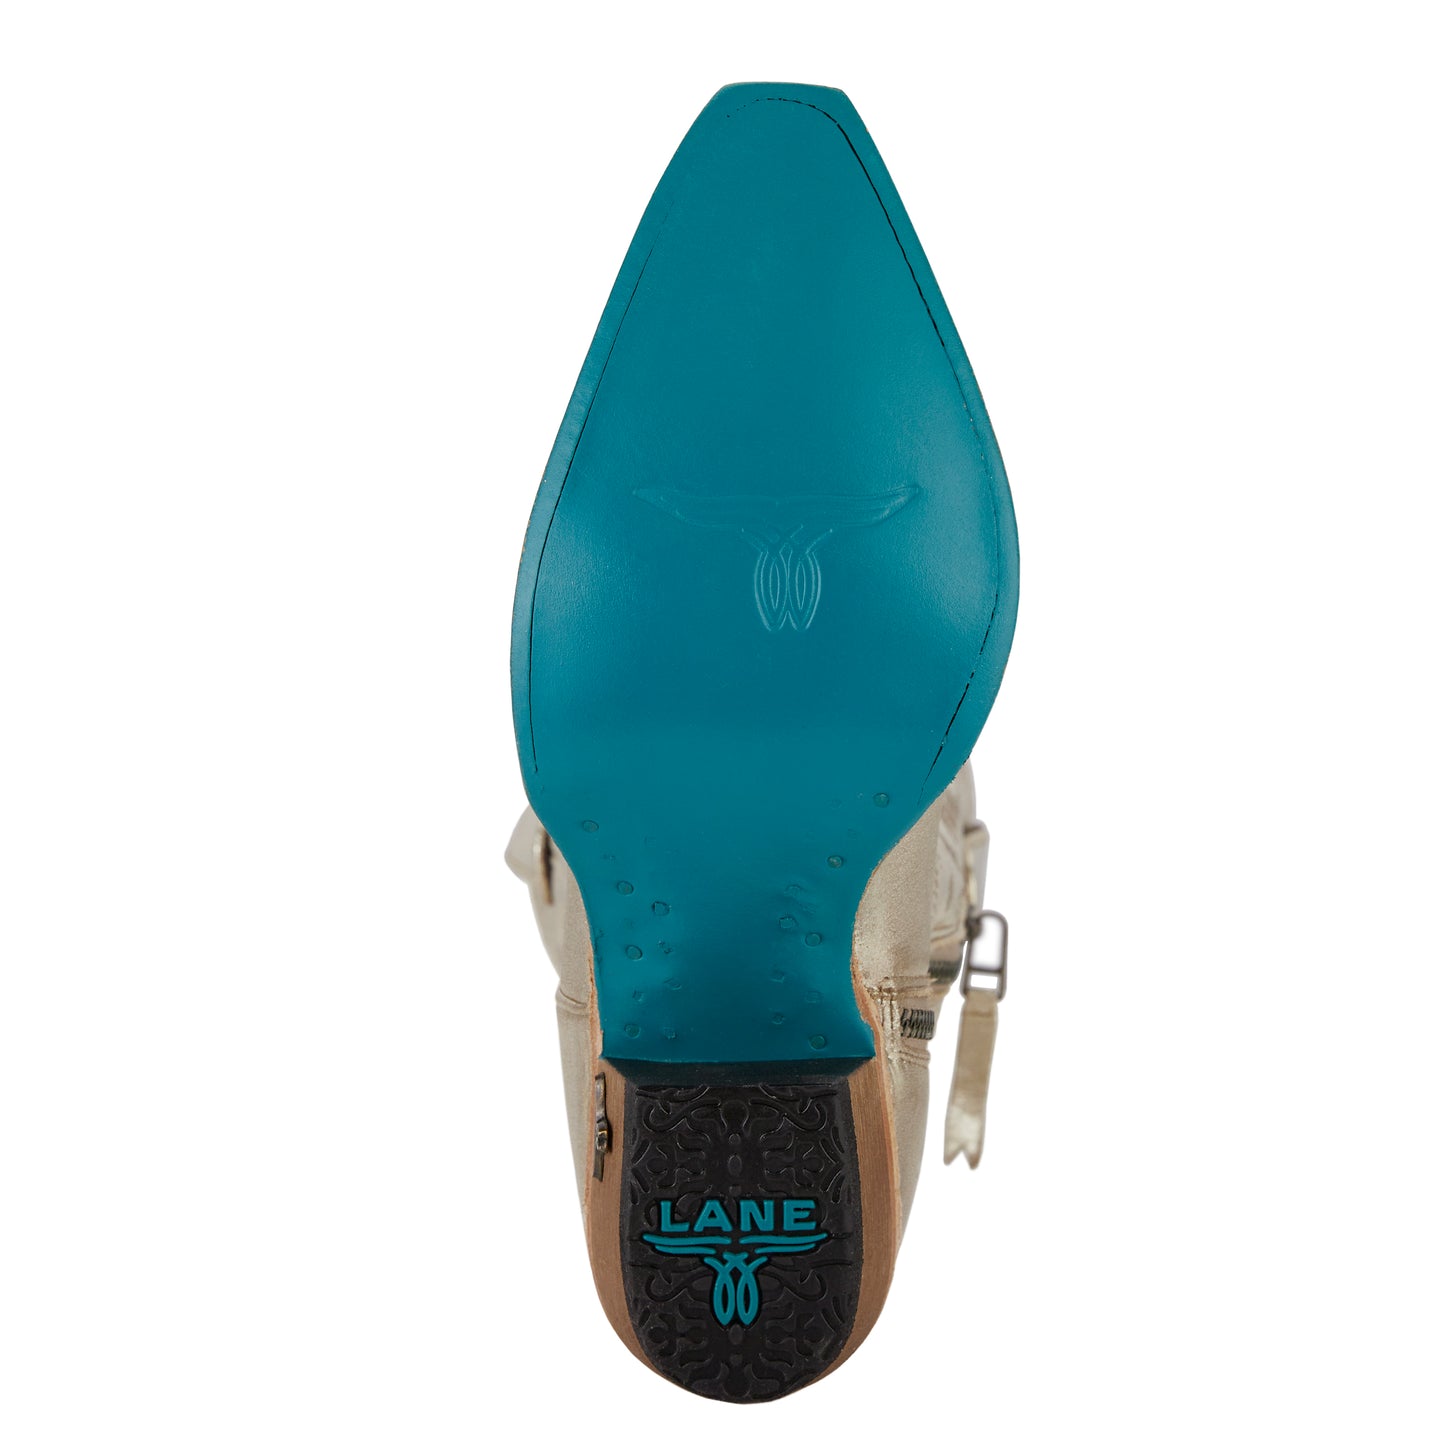 Lane Ladies Smokeshow Champagne Metallic Boots LB0526G